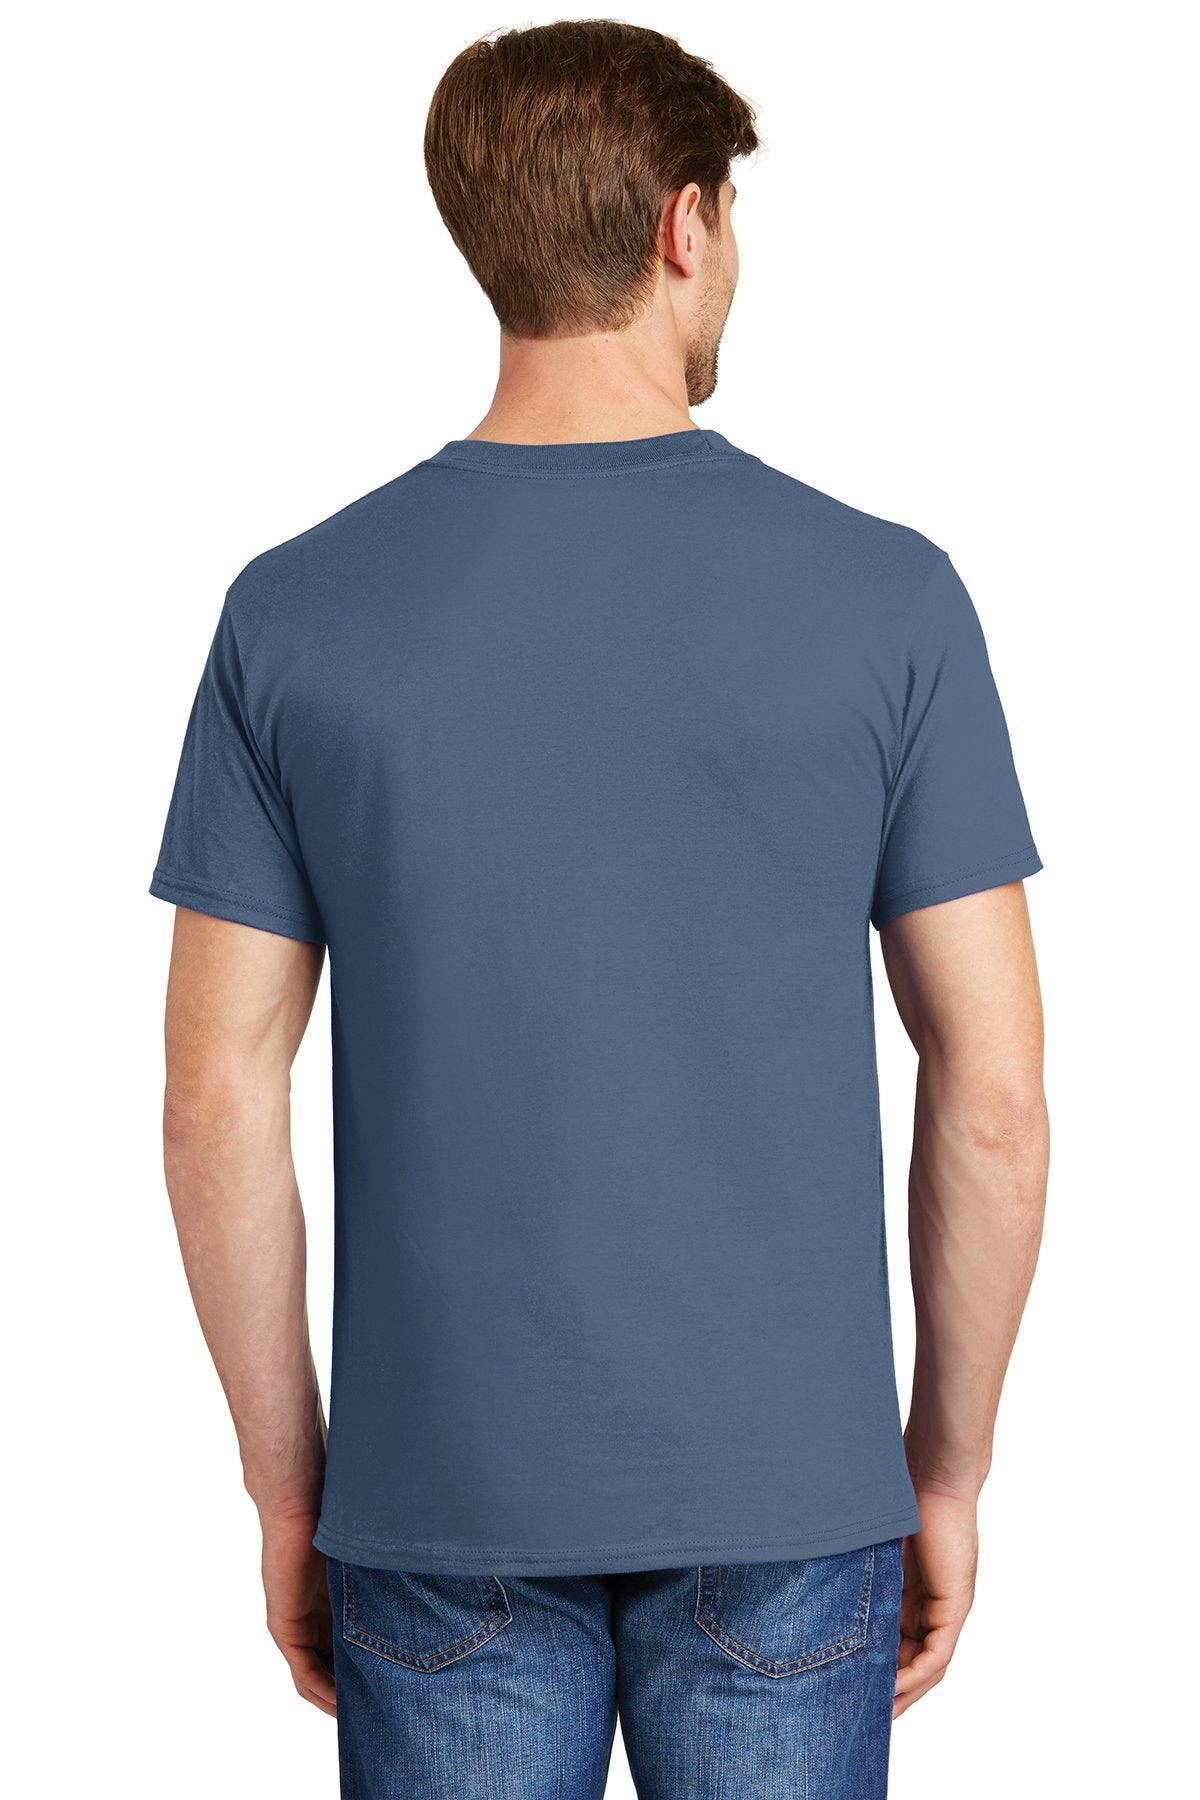 hanes beefy cotton t shirt with pocket 5190 denim blue